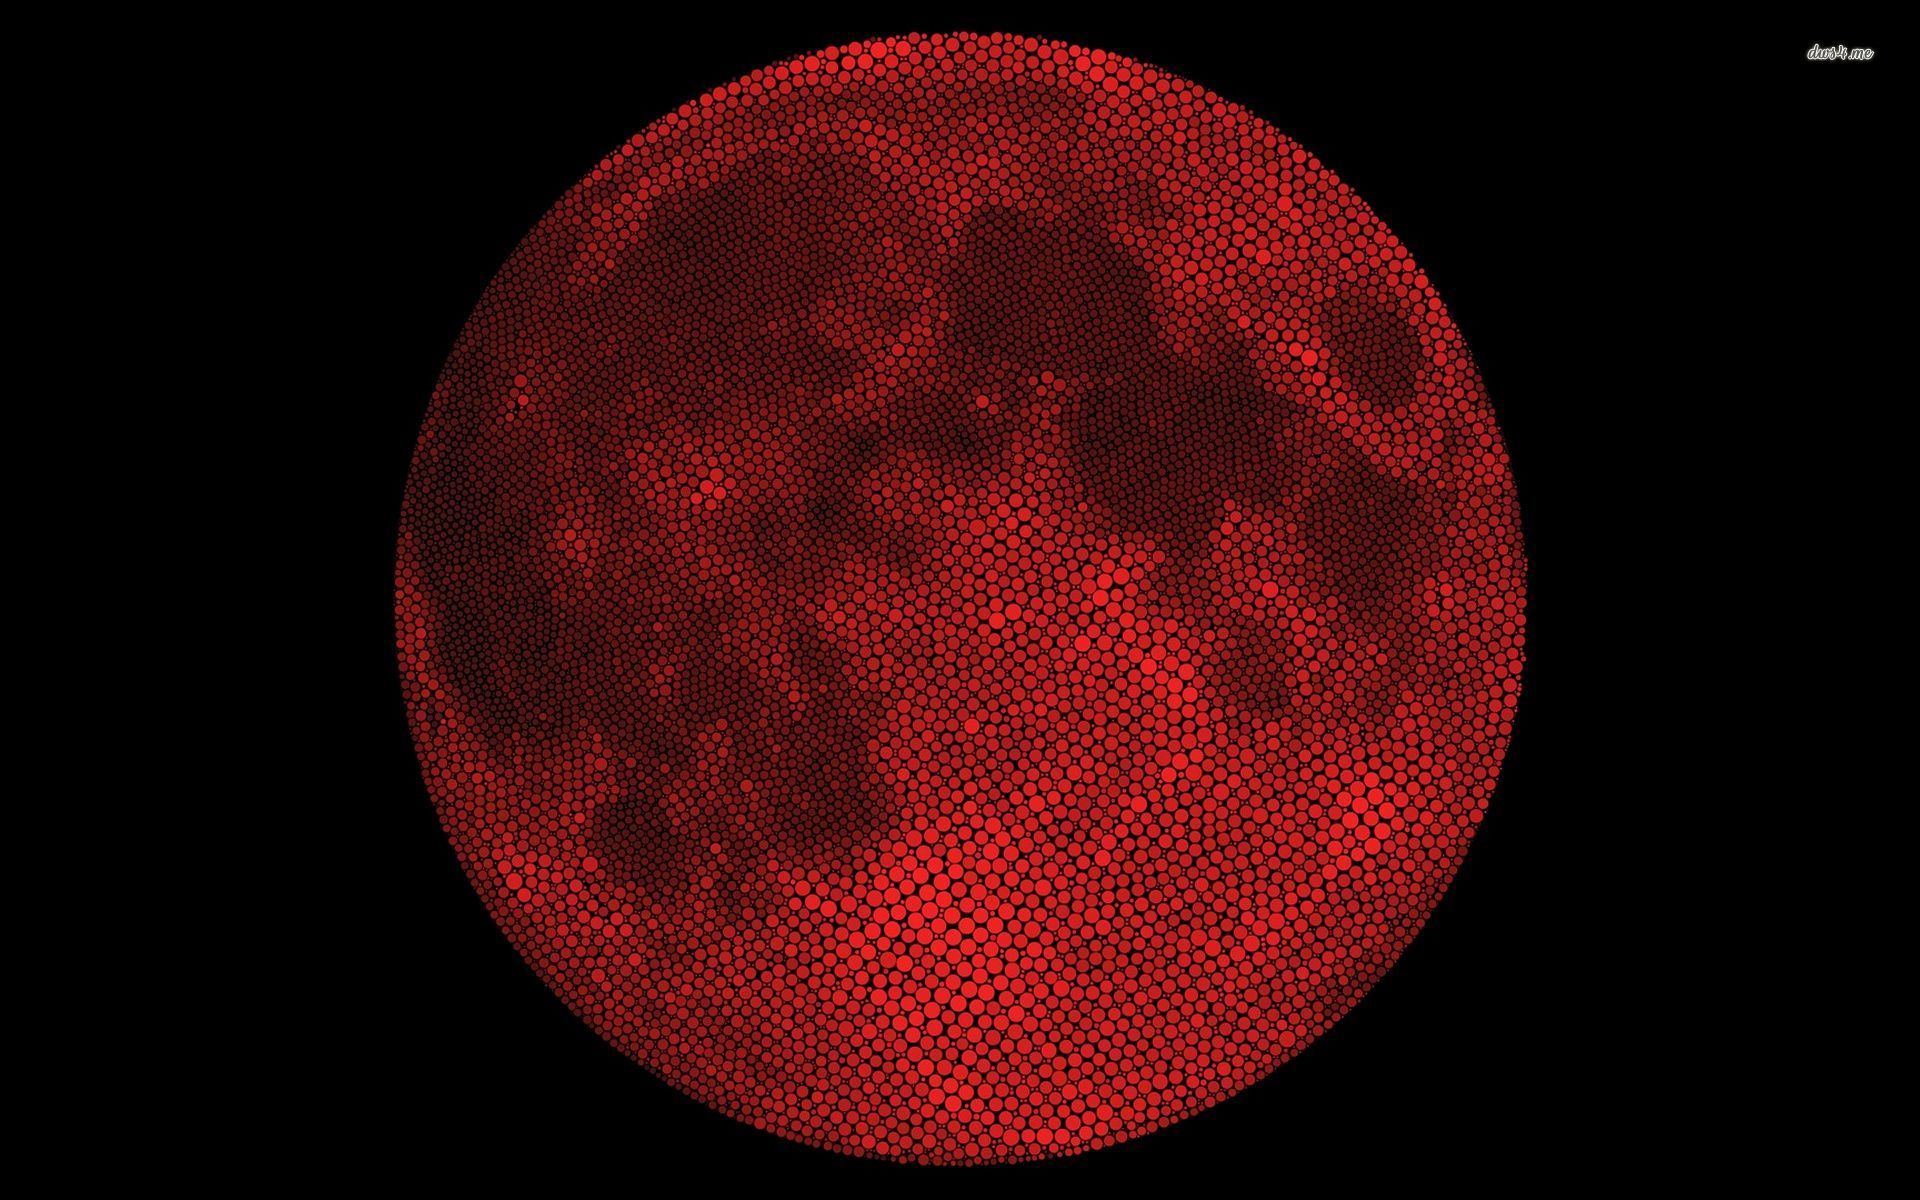 Red moon wallpaper - Digital Art wallpapers - #35635